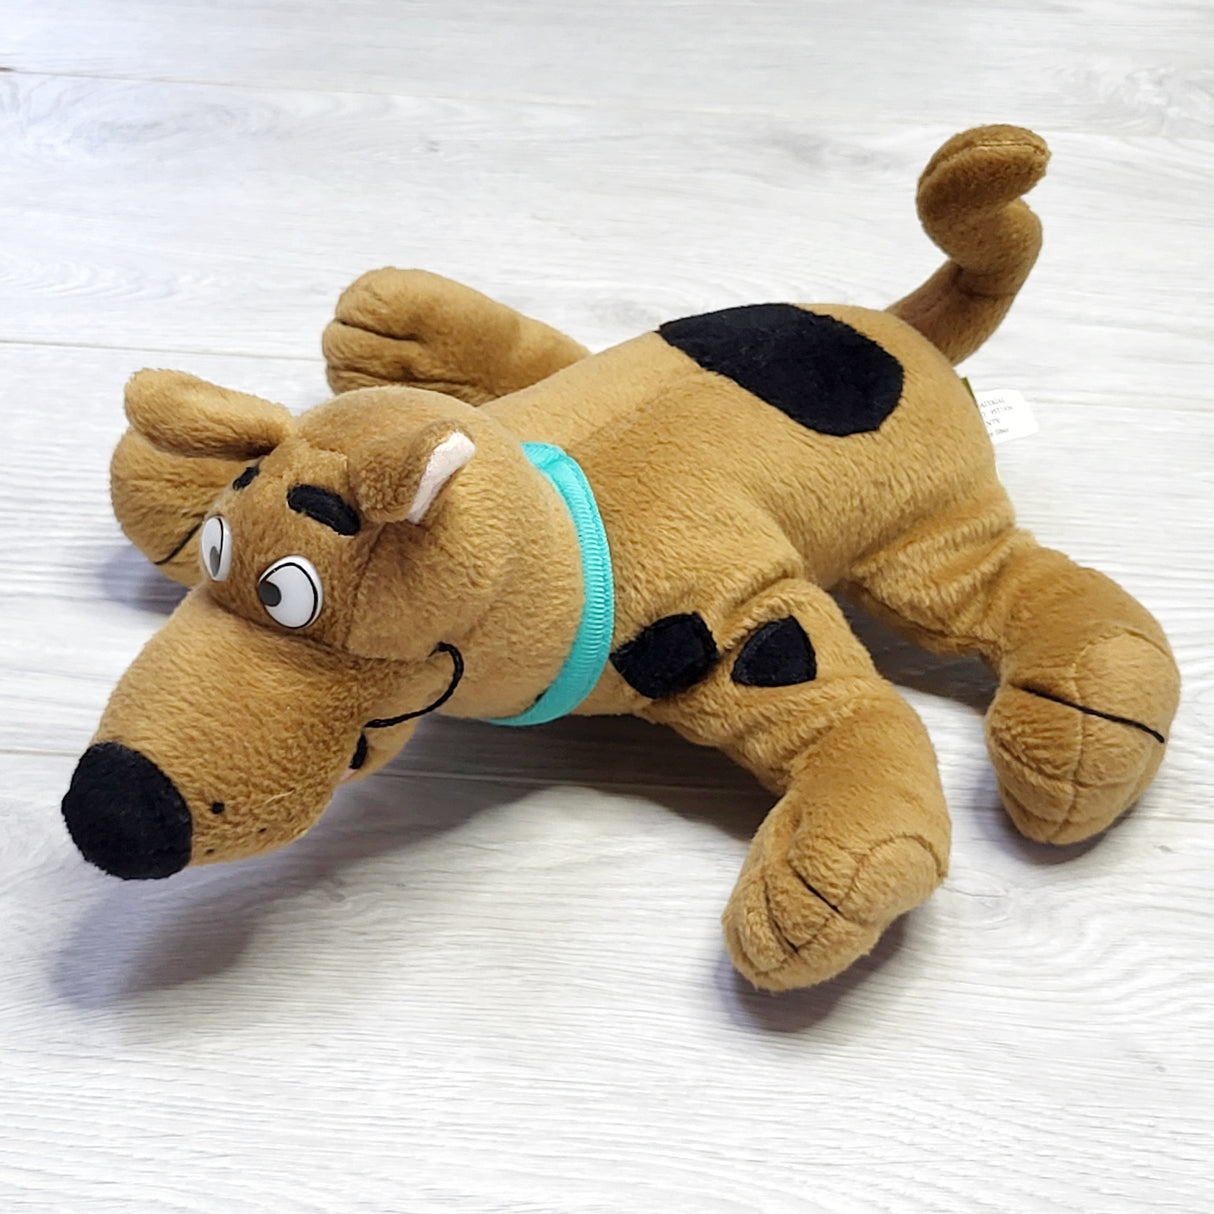 KJHN2 - Plush Scooby-Doo toy